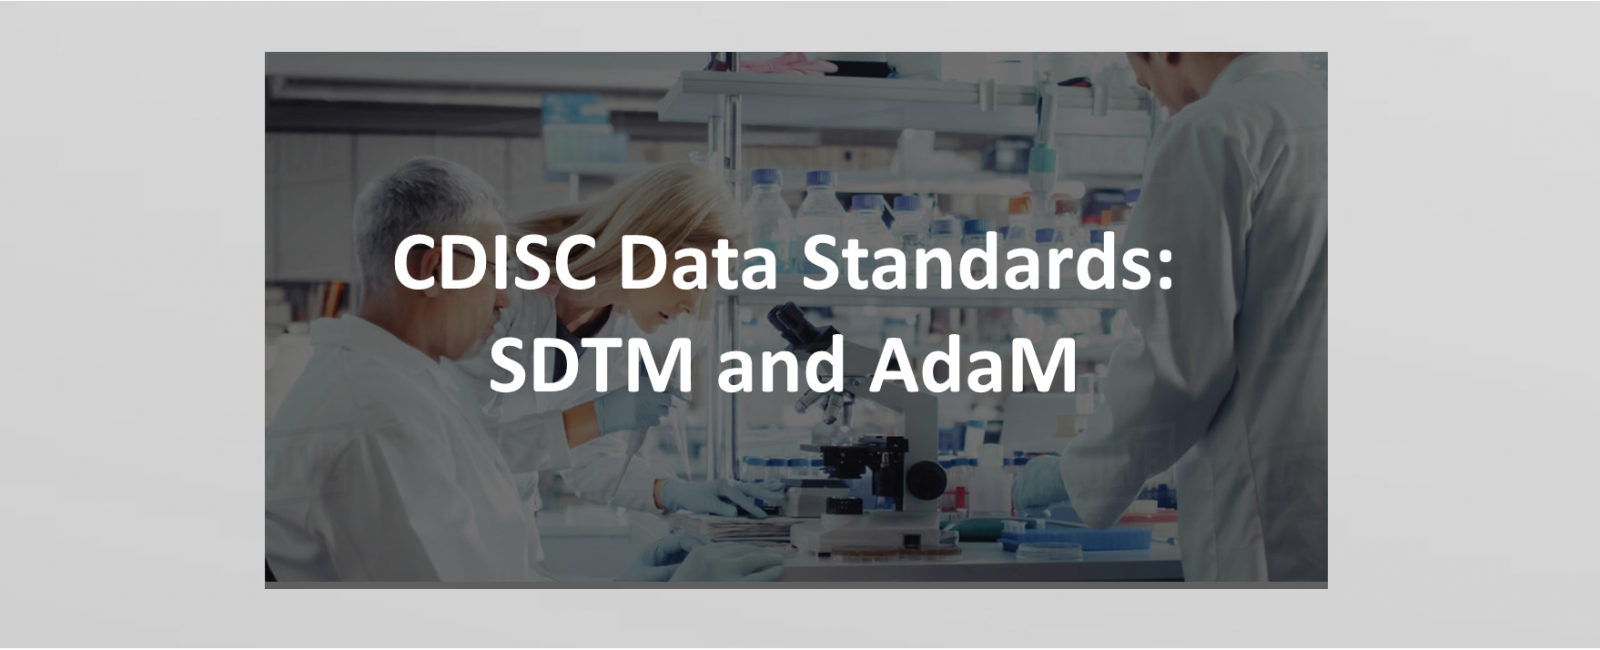 CDISC Data Standards SDTM and AdaM